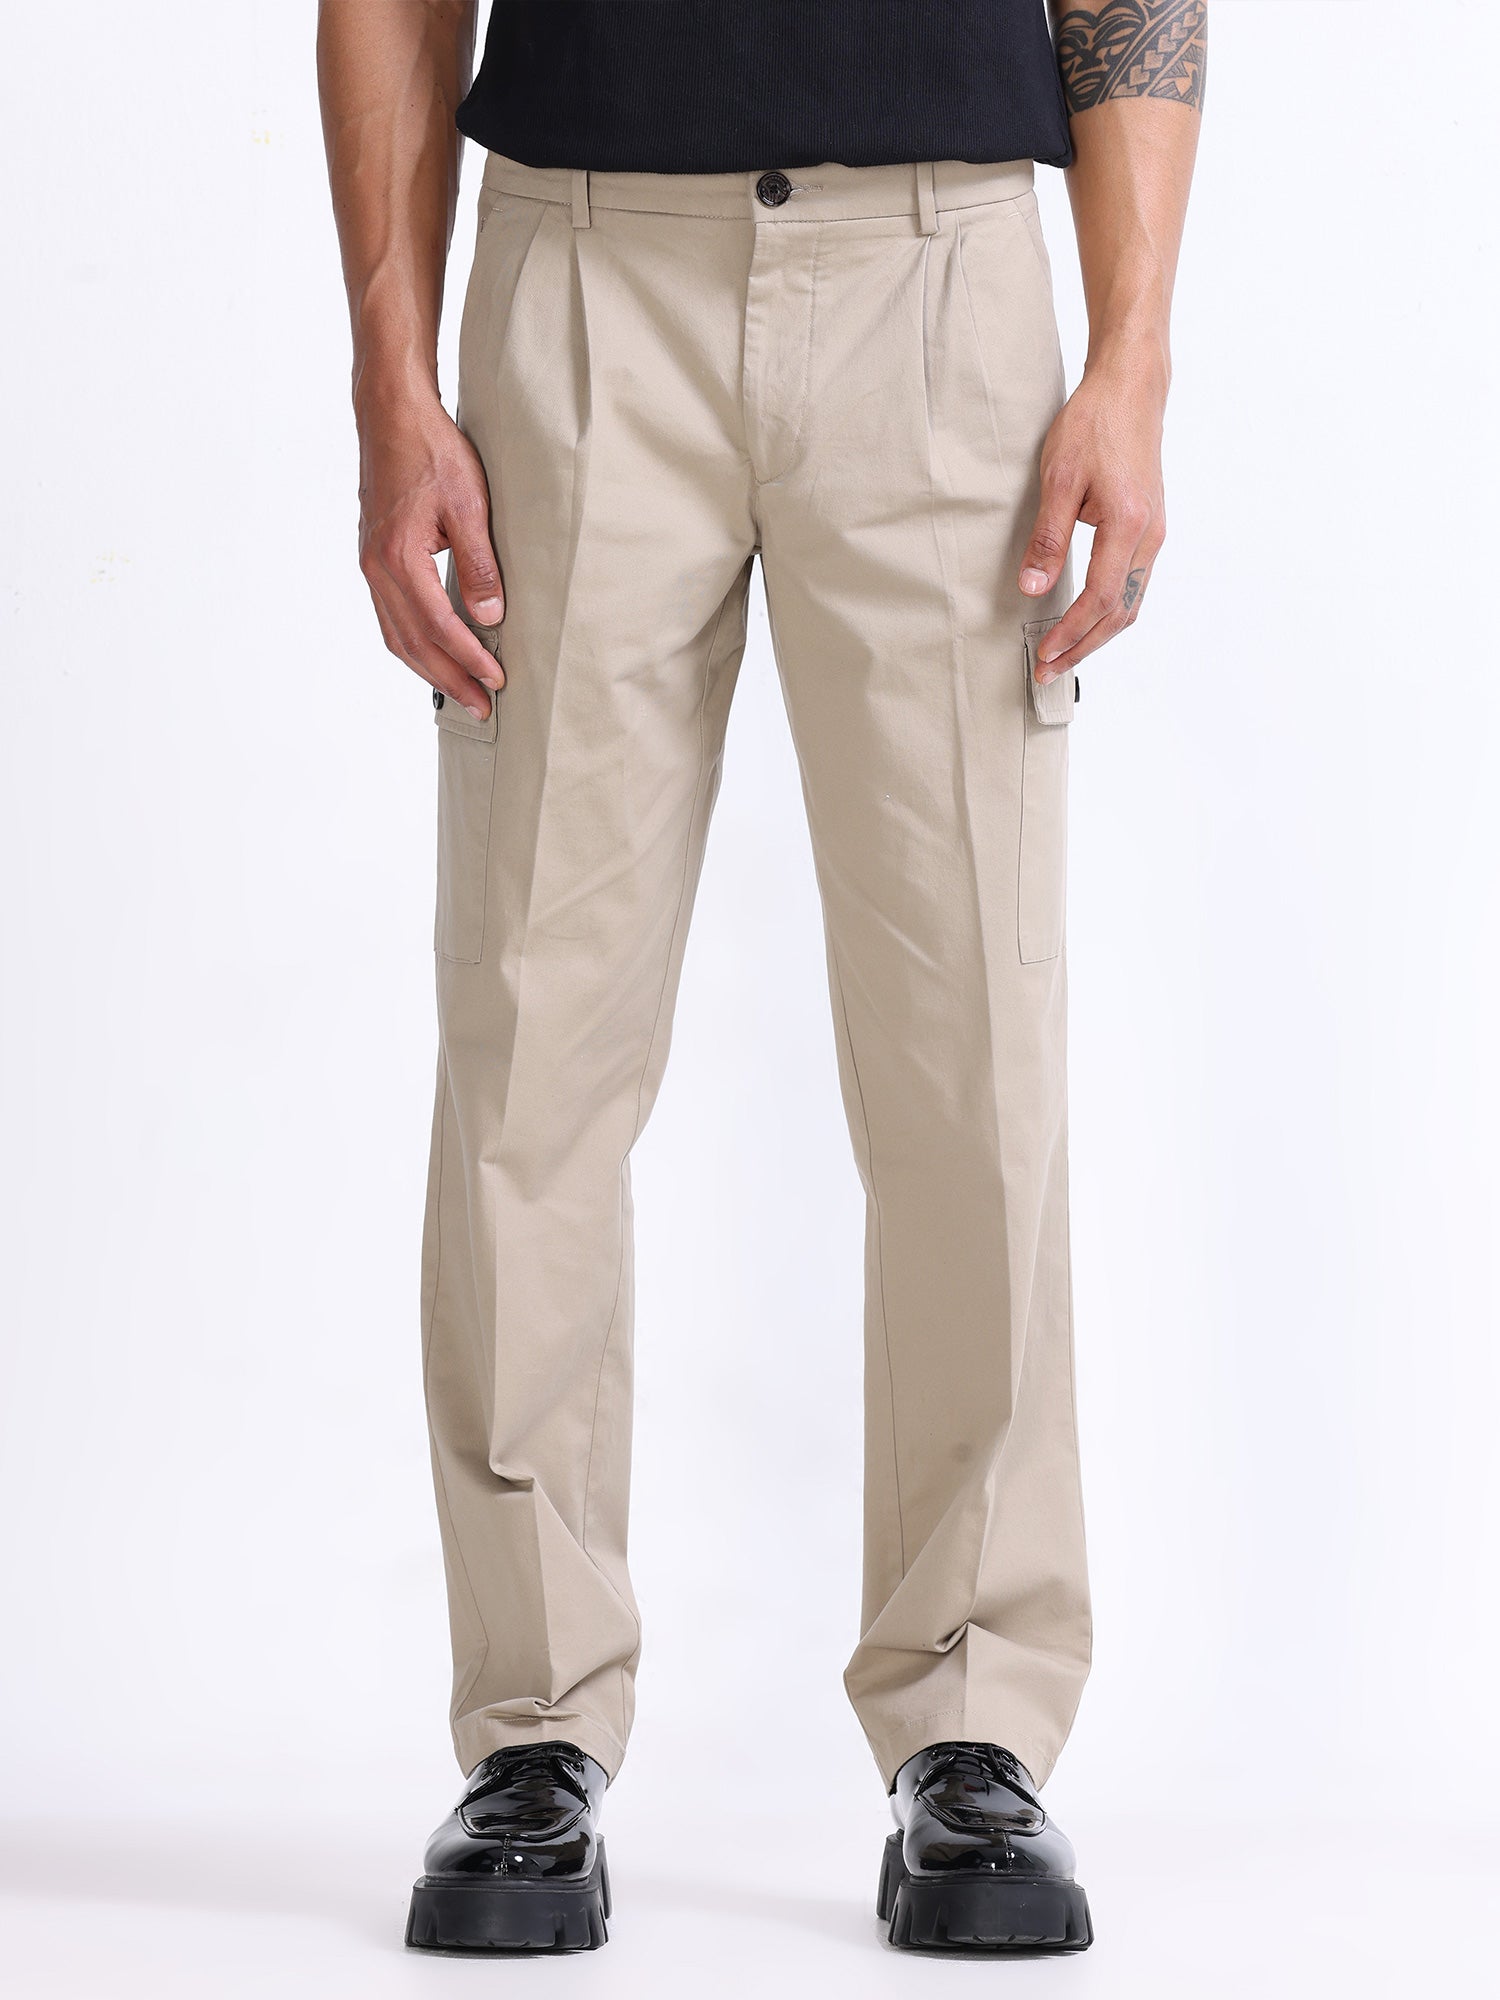 Buy uniformer Men's Regular Fit Polyester Blend Trouser (umpt-001_Khaki_28)  at Amazon.in